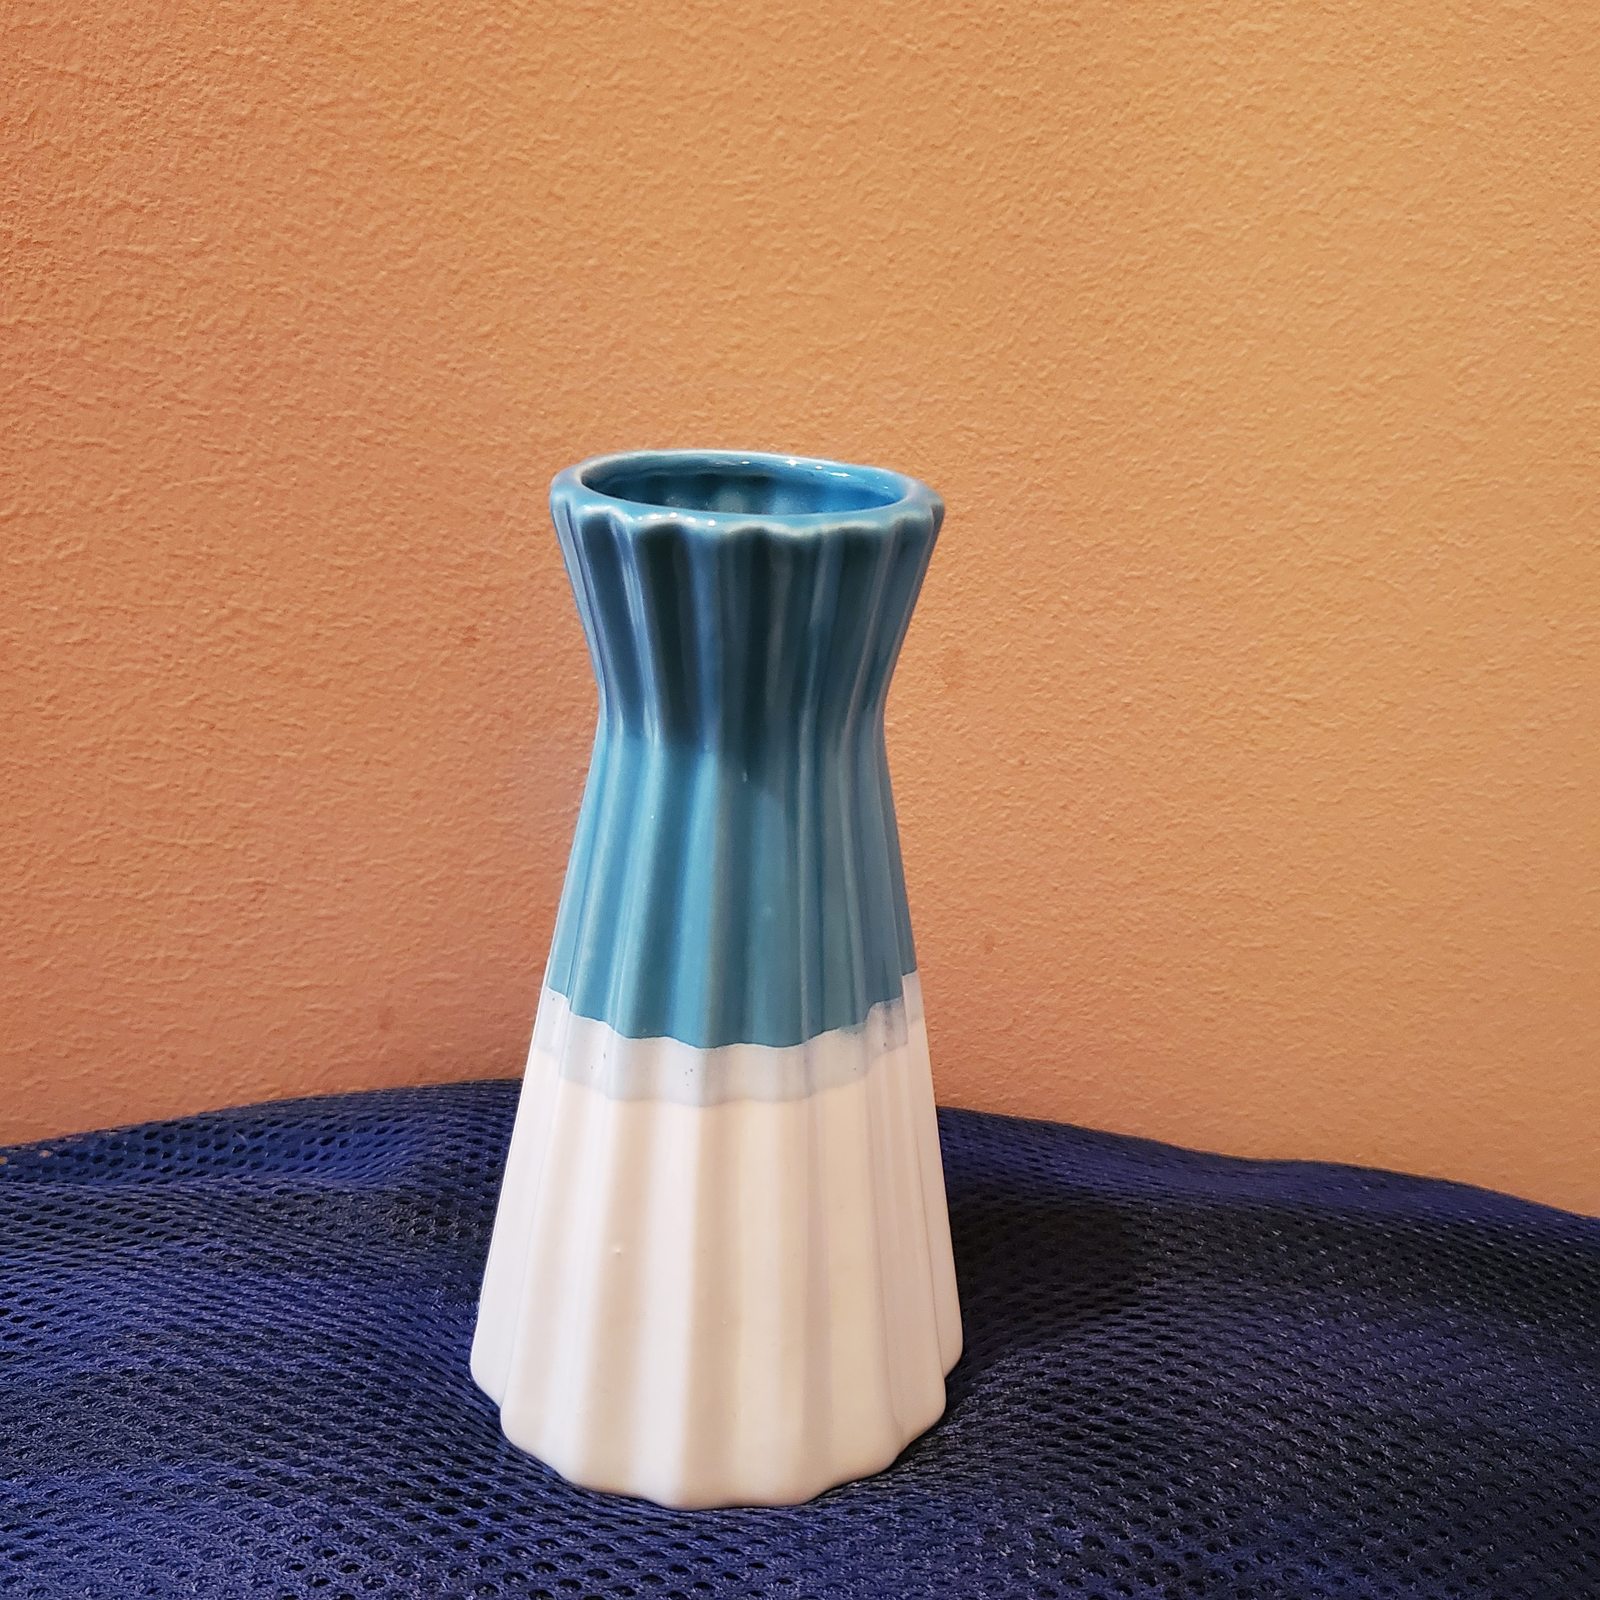 Ceramic Vase, Mothers Day Gift, Blue White Bud Vase - $12.99